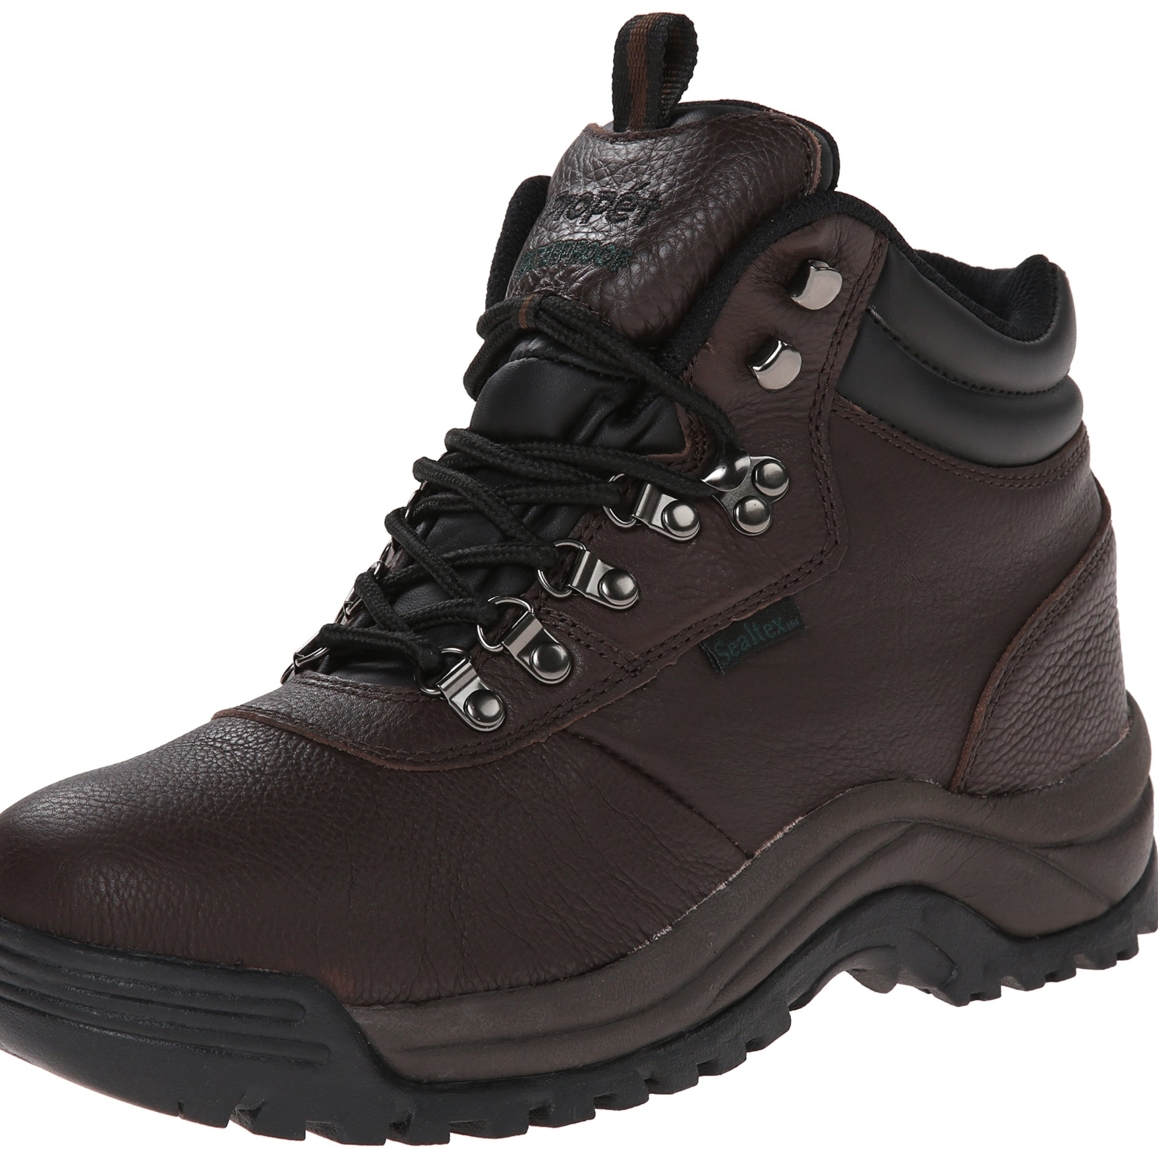 Propet Men's Cliff Walker Hiking Boot Bronco Brown - M3188BRO - BRONCO BROWN, 16-2E